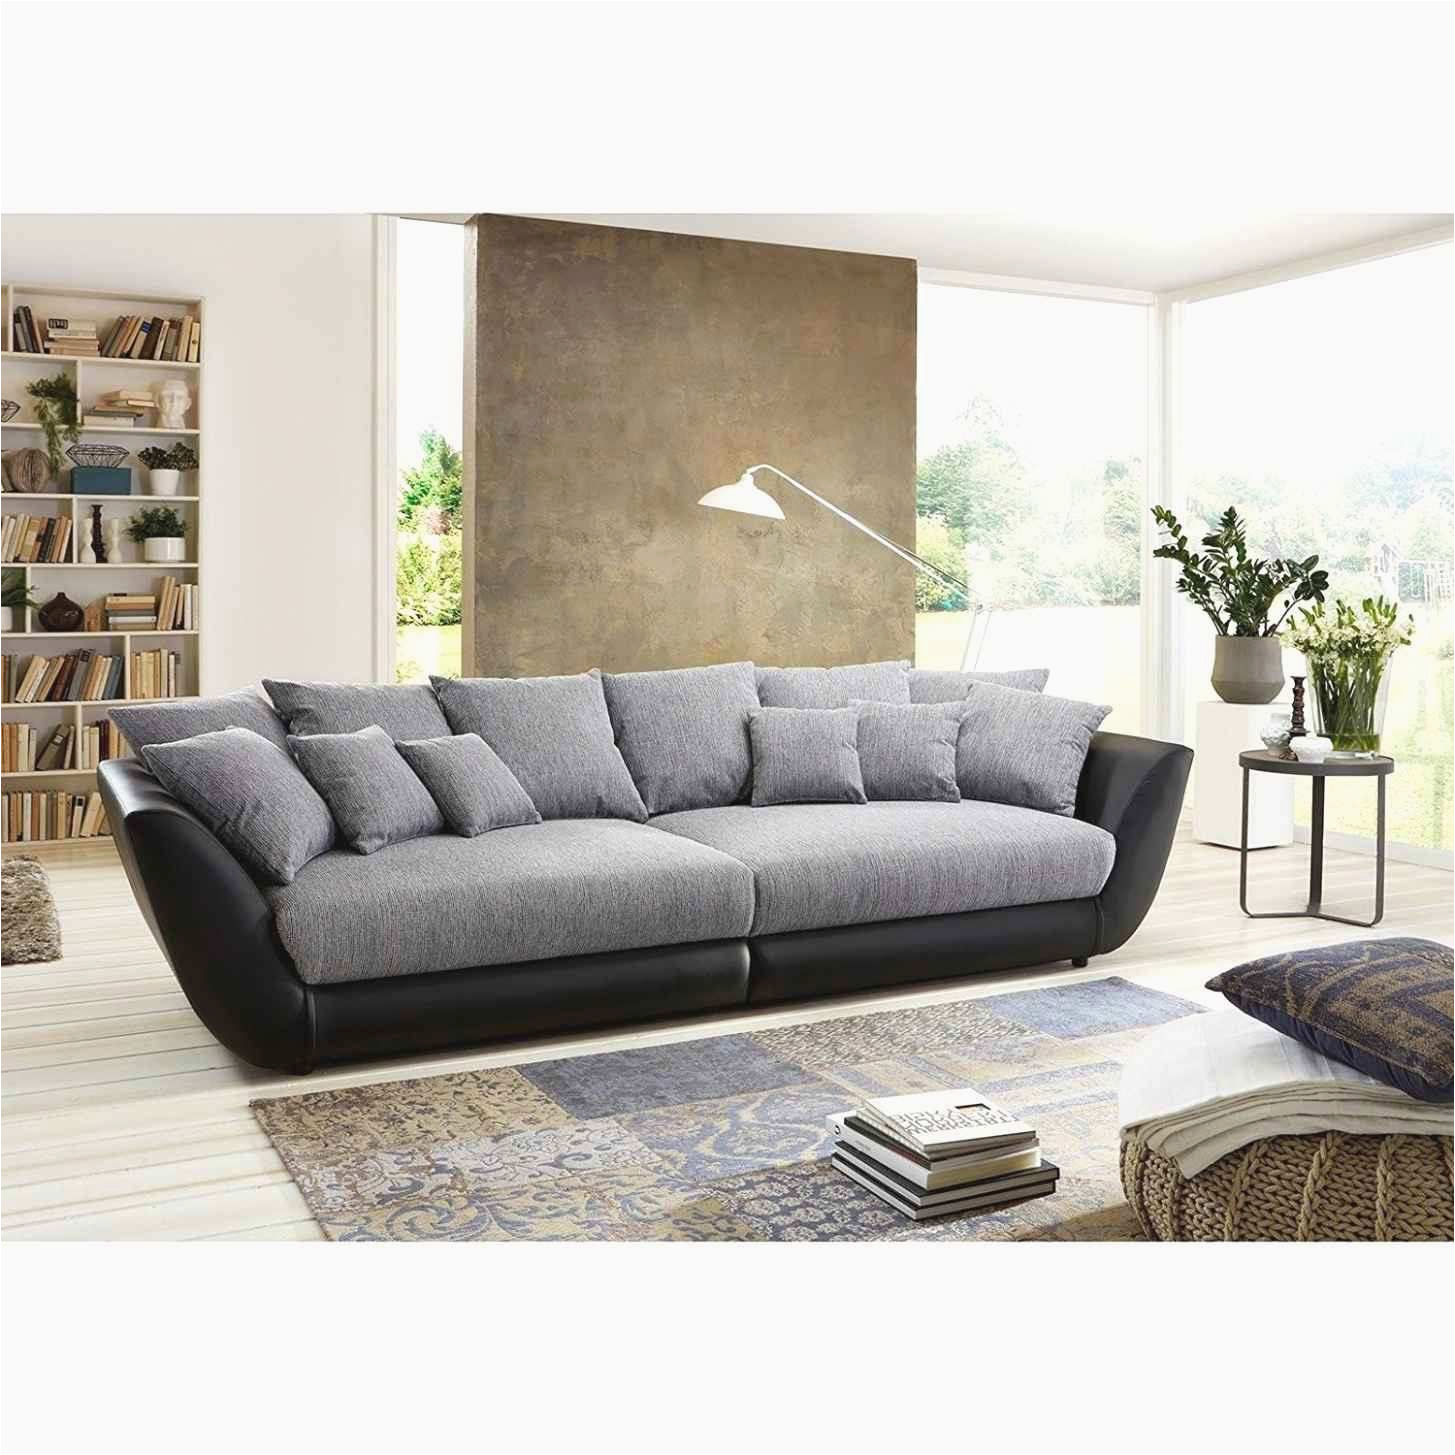 sofa grau stoff das beste von 41 einzigartig designer couch leder leroy merlin seche of sofa grau stoff